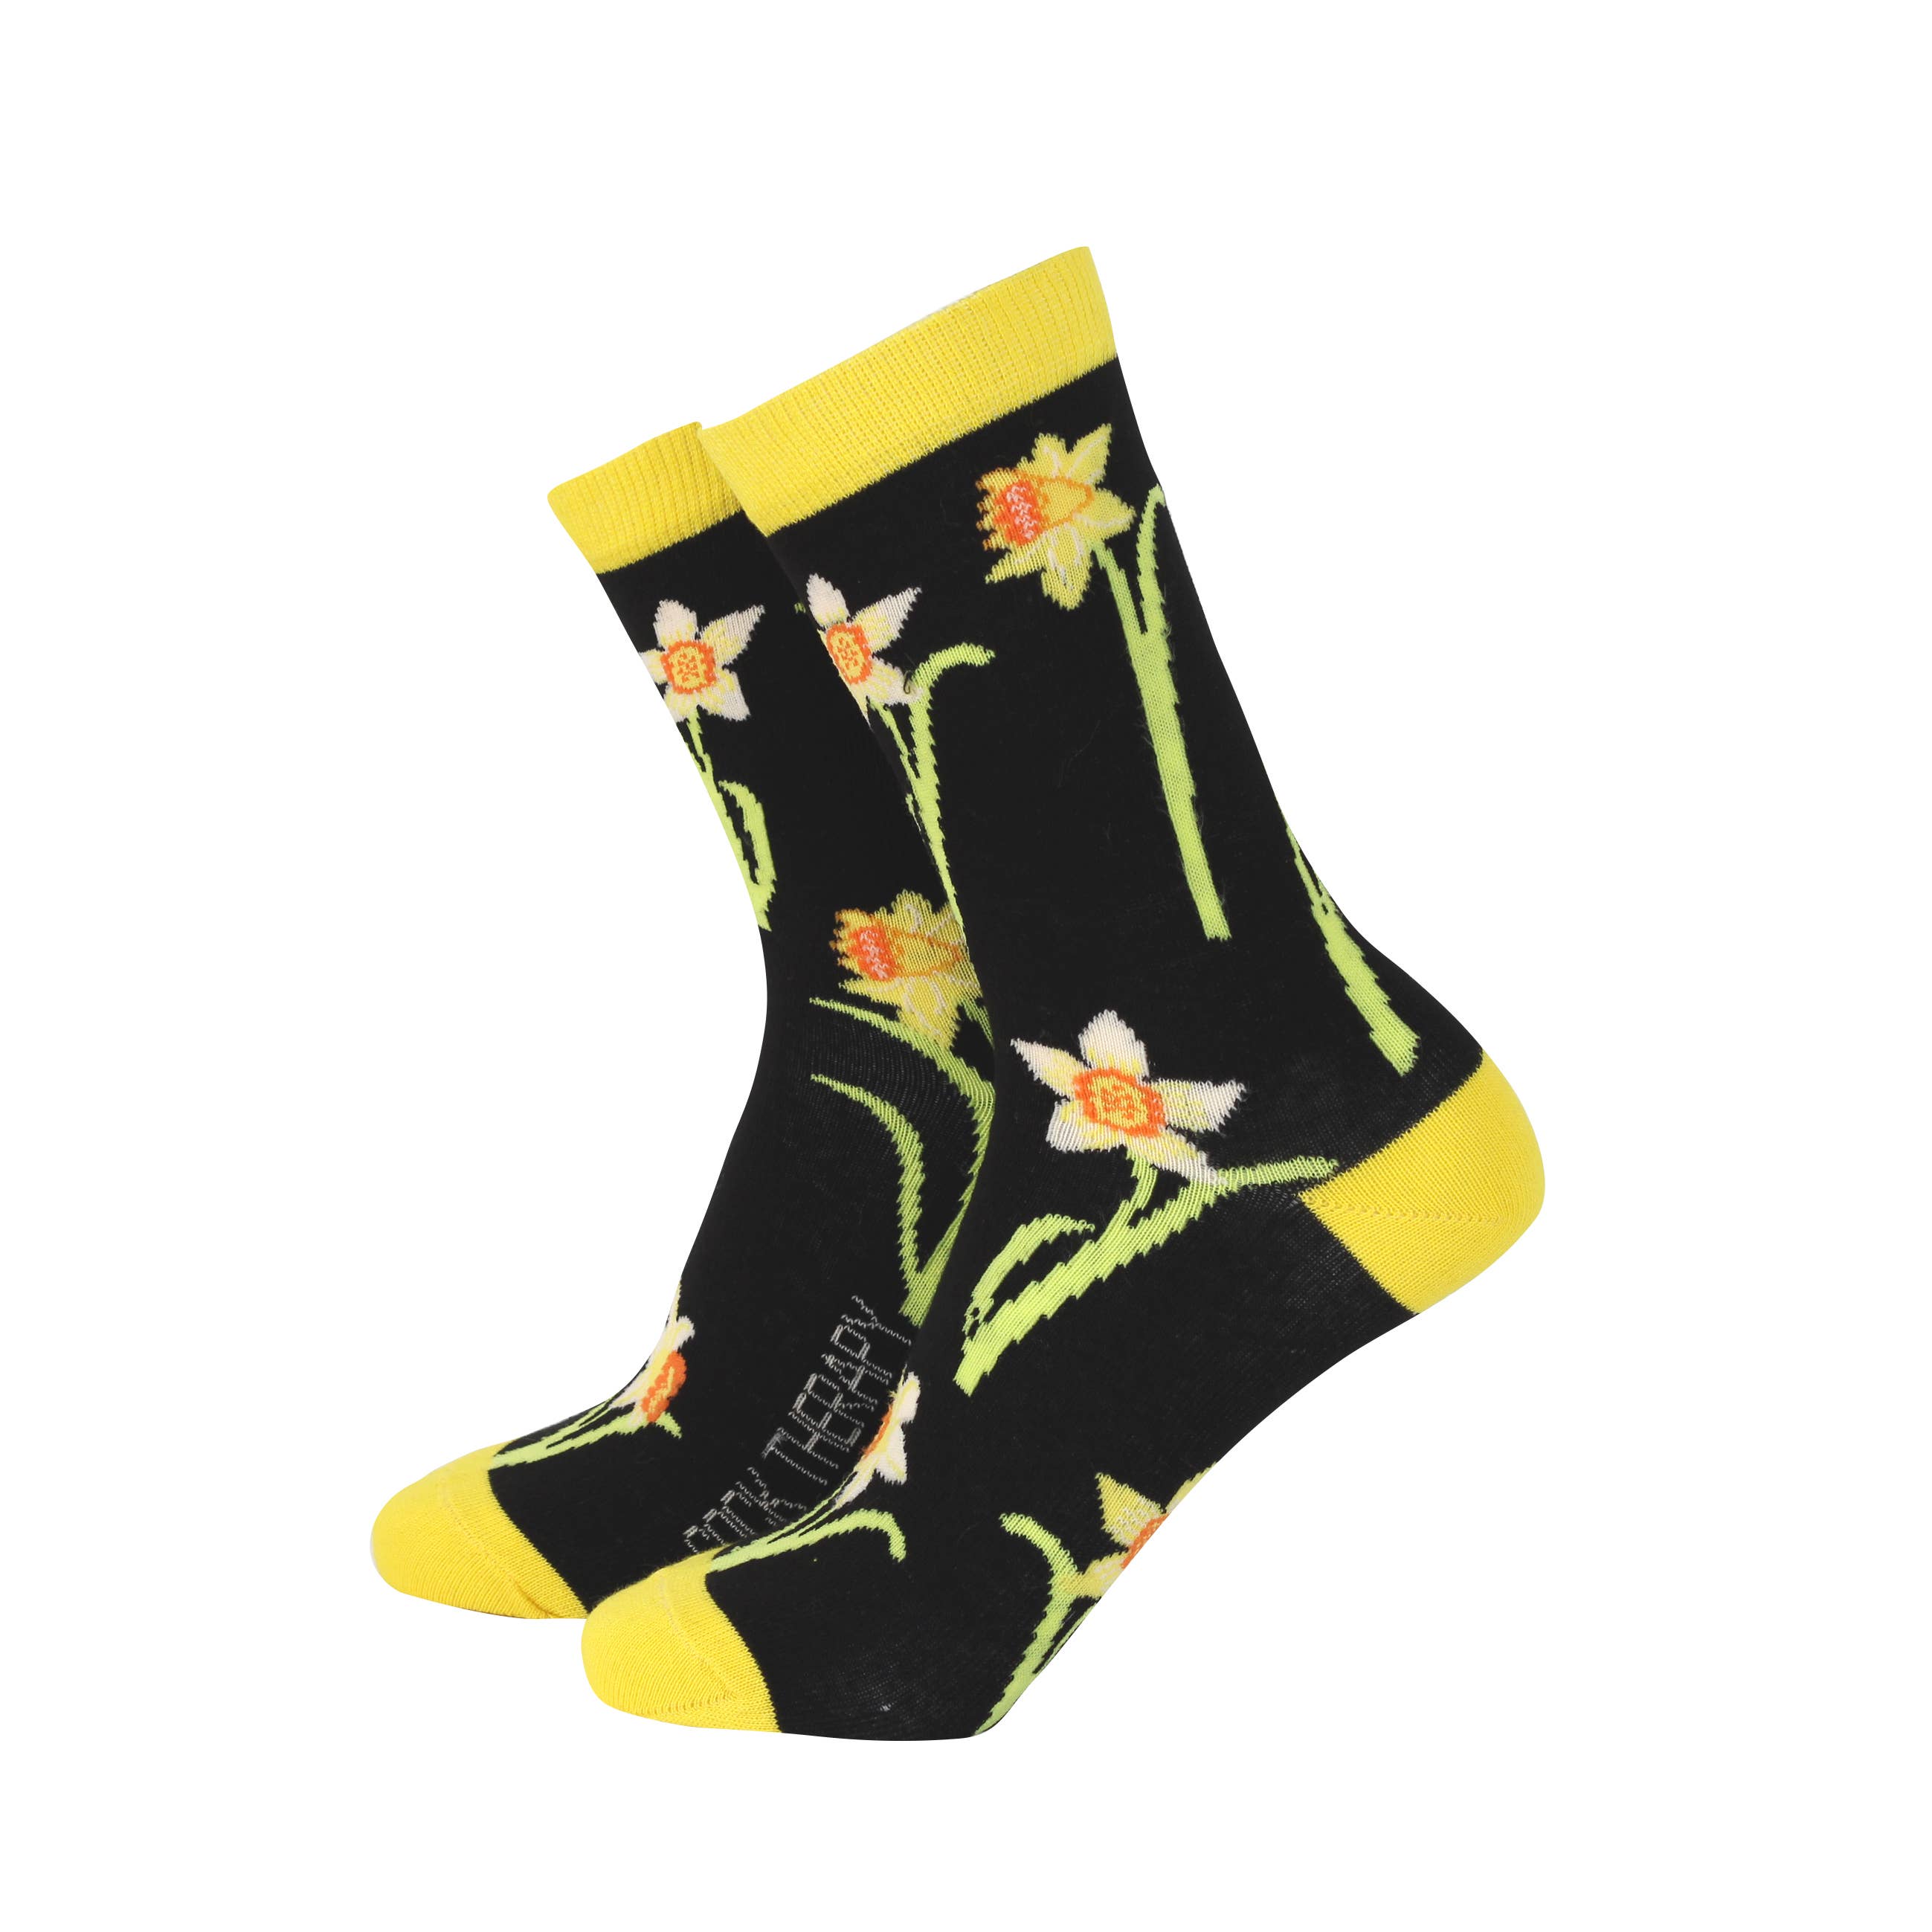 Daffodil Flowers - Women's Bamboo Socks - UK 4-7